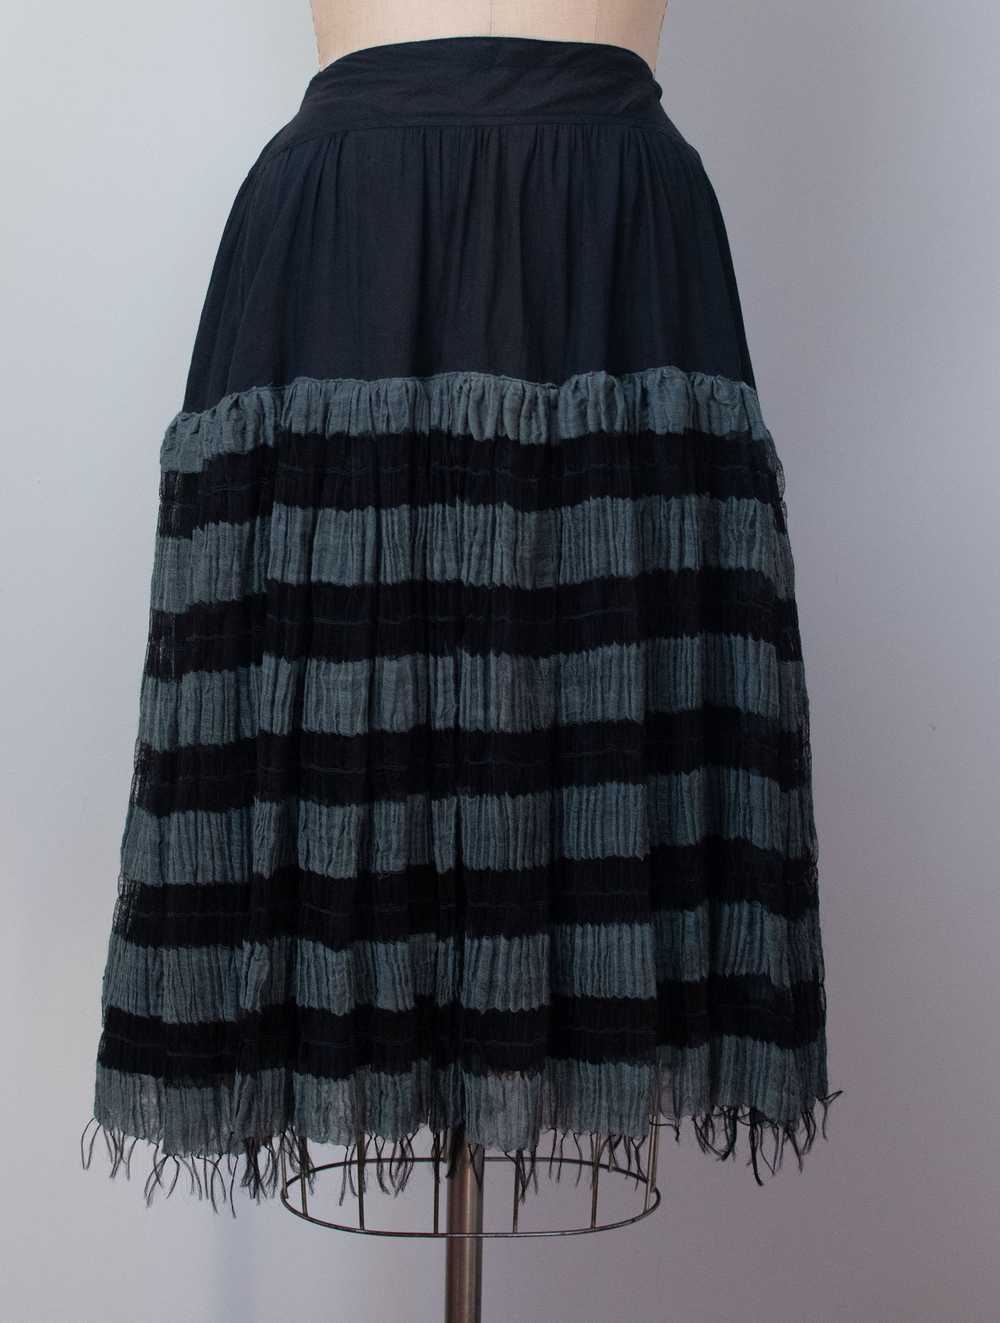 1980s -1990s Textile Skirt - image 5